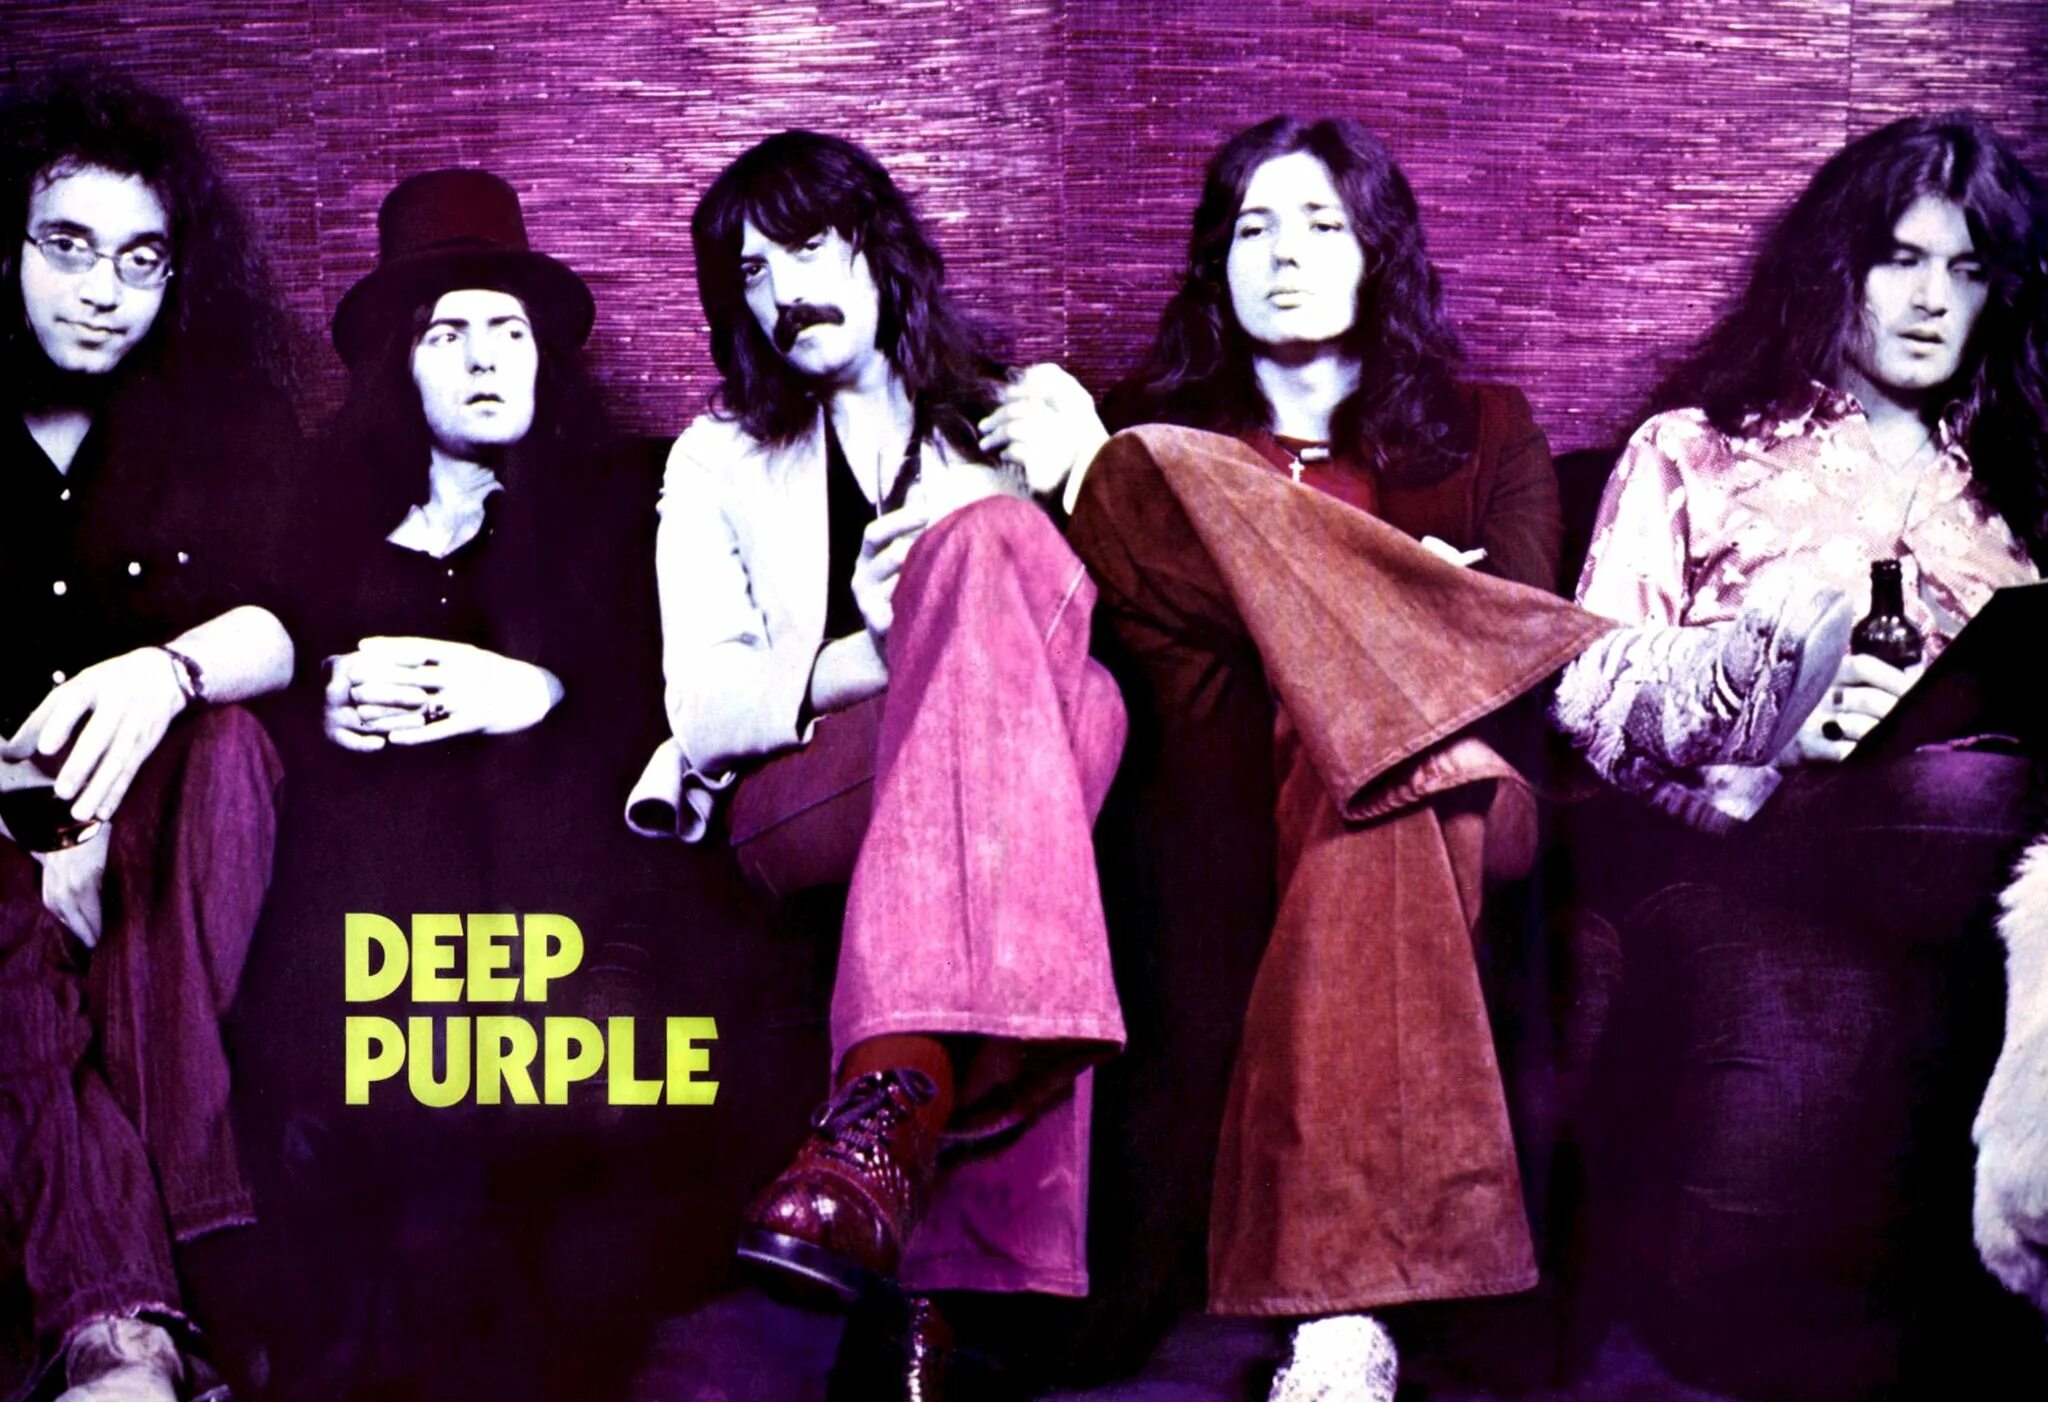 Ди перпл. Группа дип перпл. Группа Deep Purple 1974. Группа Deep Purple 1970. Дип перпл (Deep Purple).